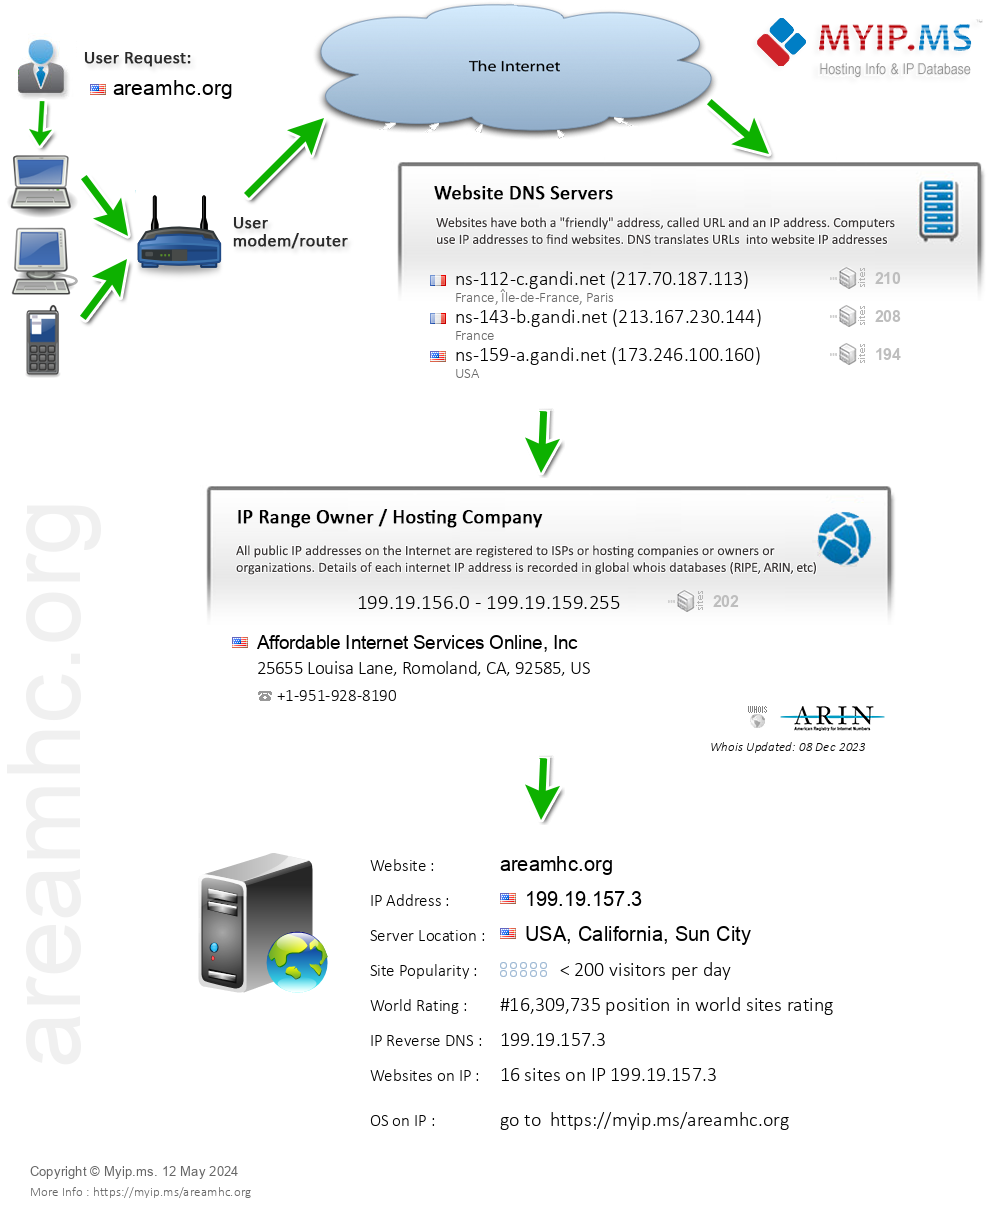 Areamhc.org - Website Hosting Visual IP Diagram